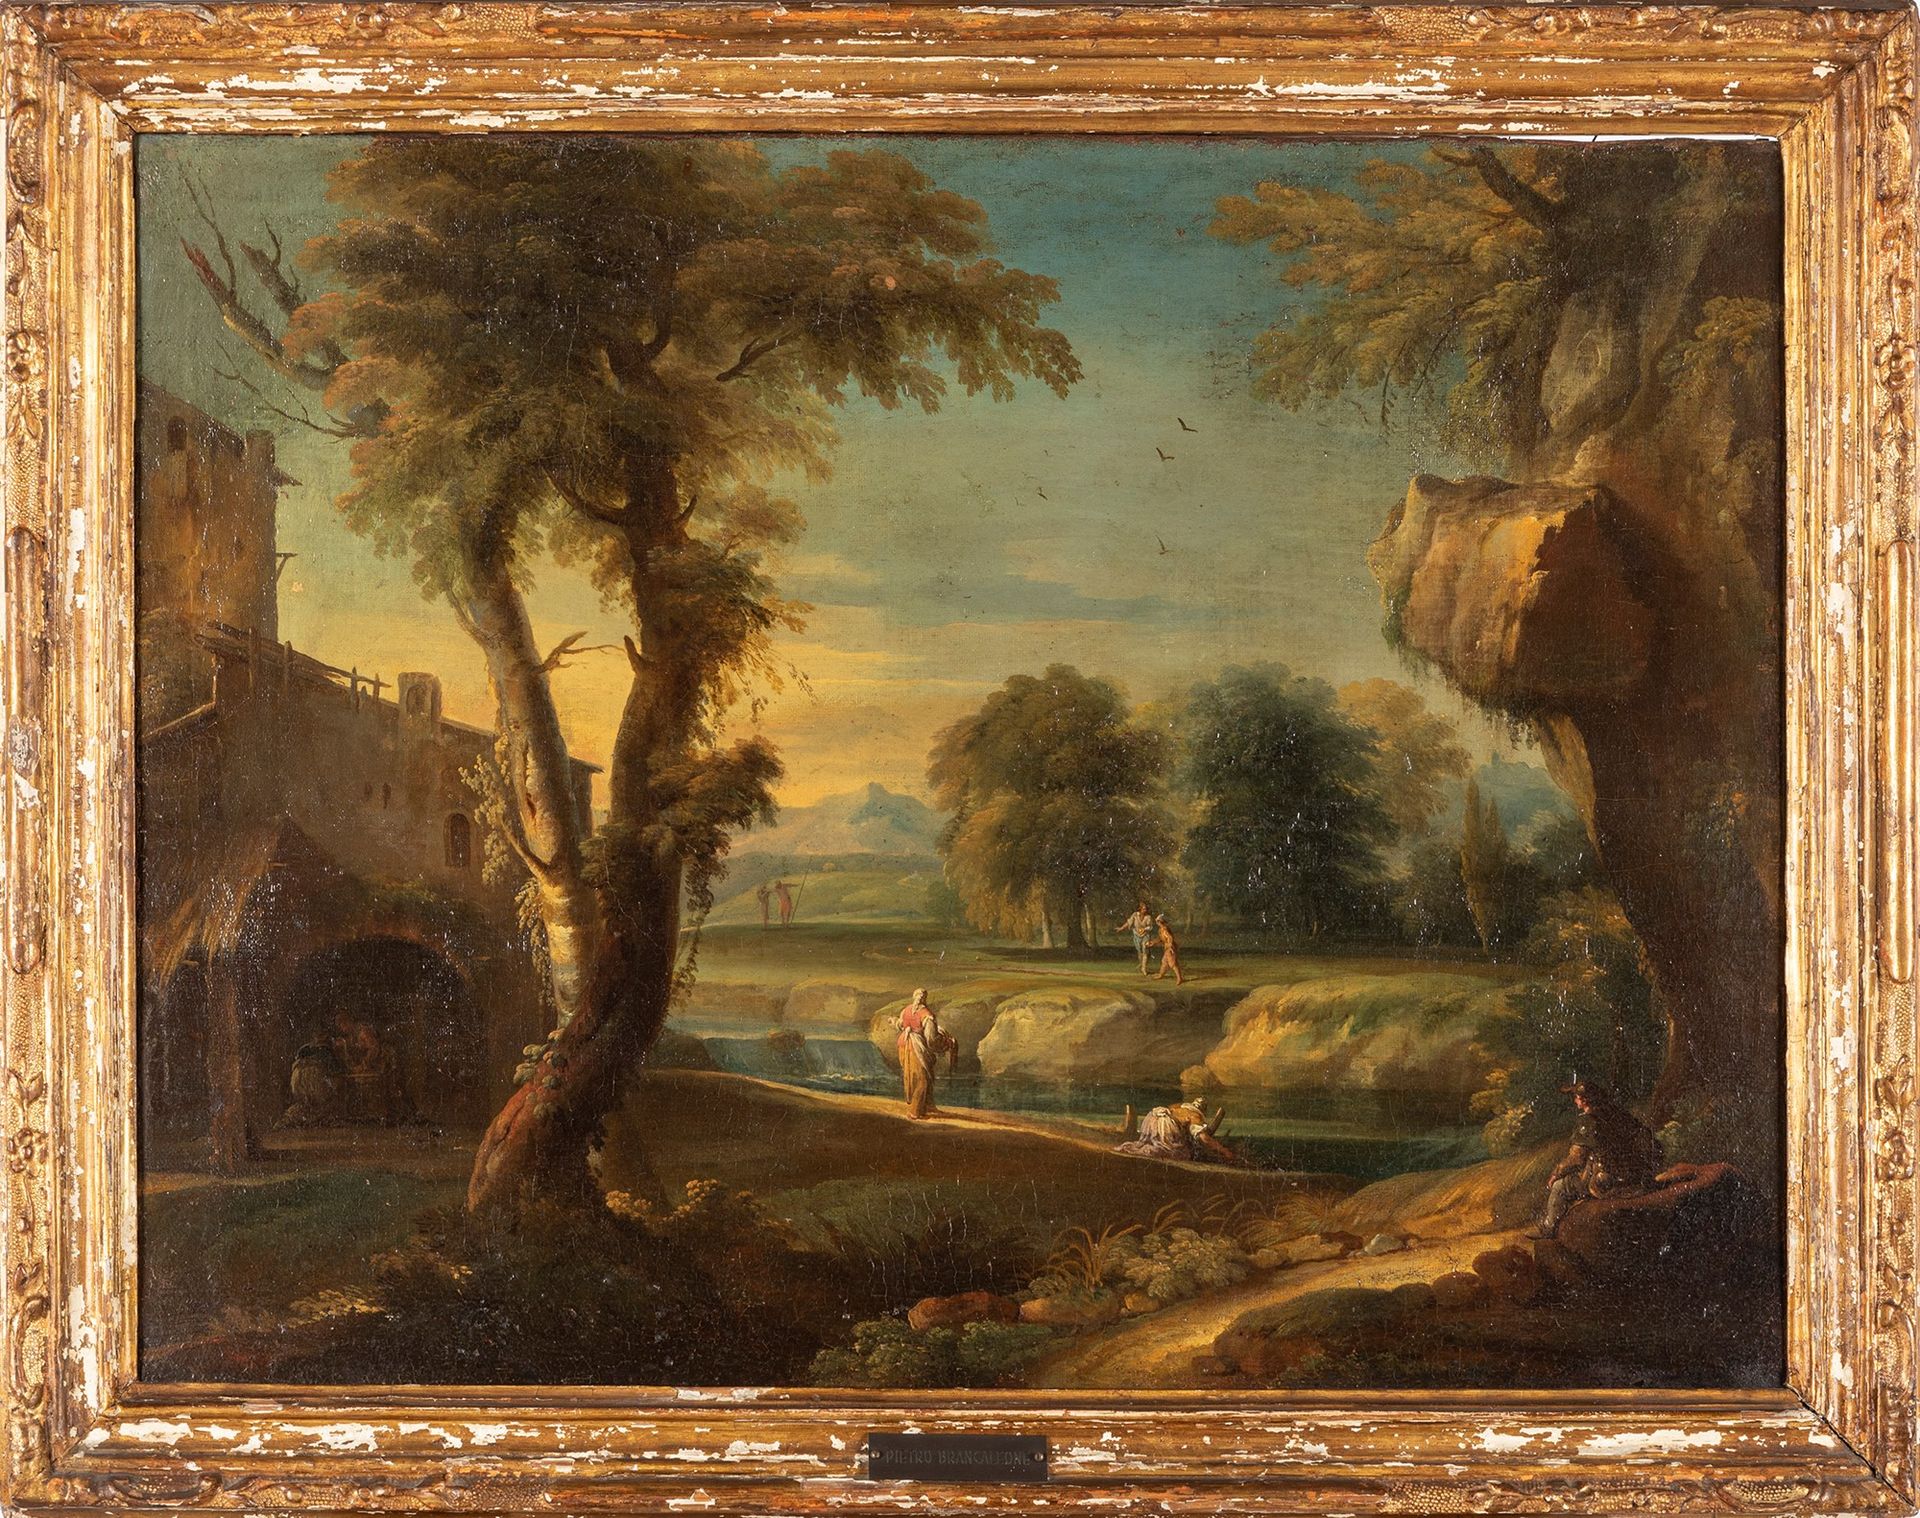 Scuola veneta, secolo XVIII 河边的洗衣女工和流浪者的风景和小屋

布面油画
50.5 x 66 cm
在古董框架中